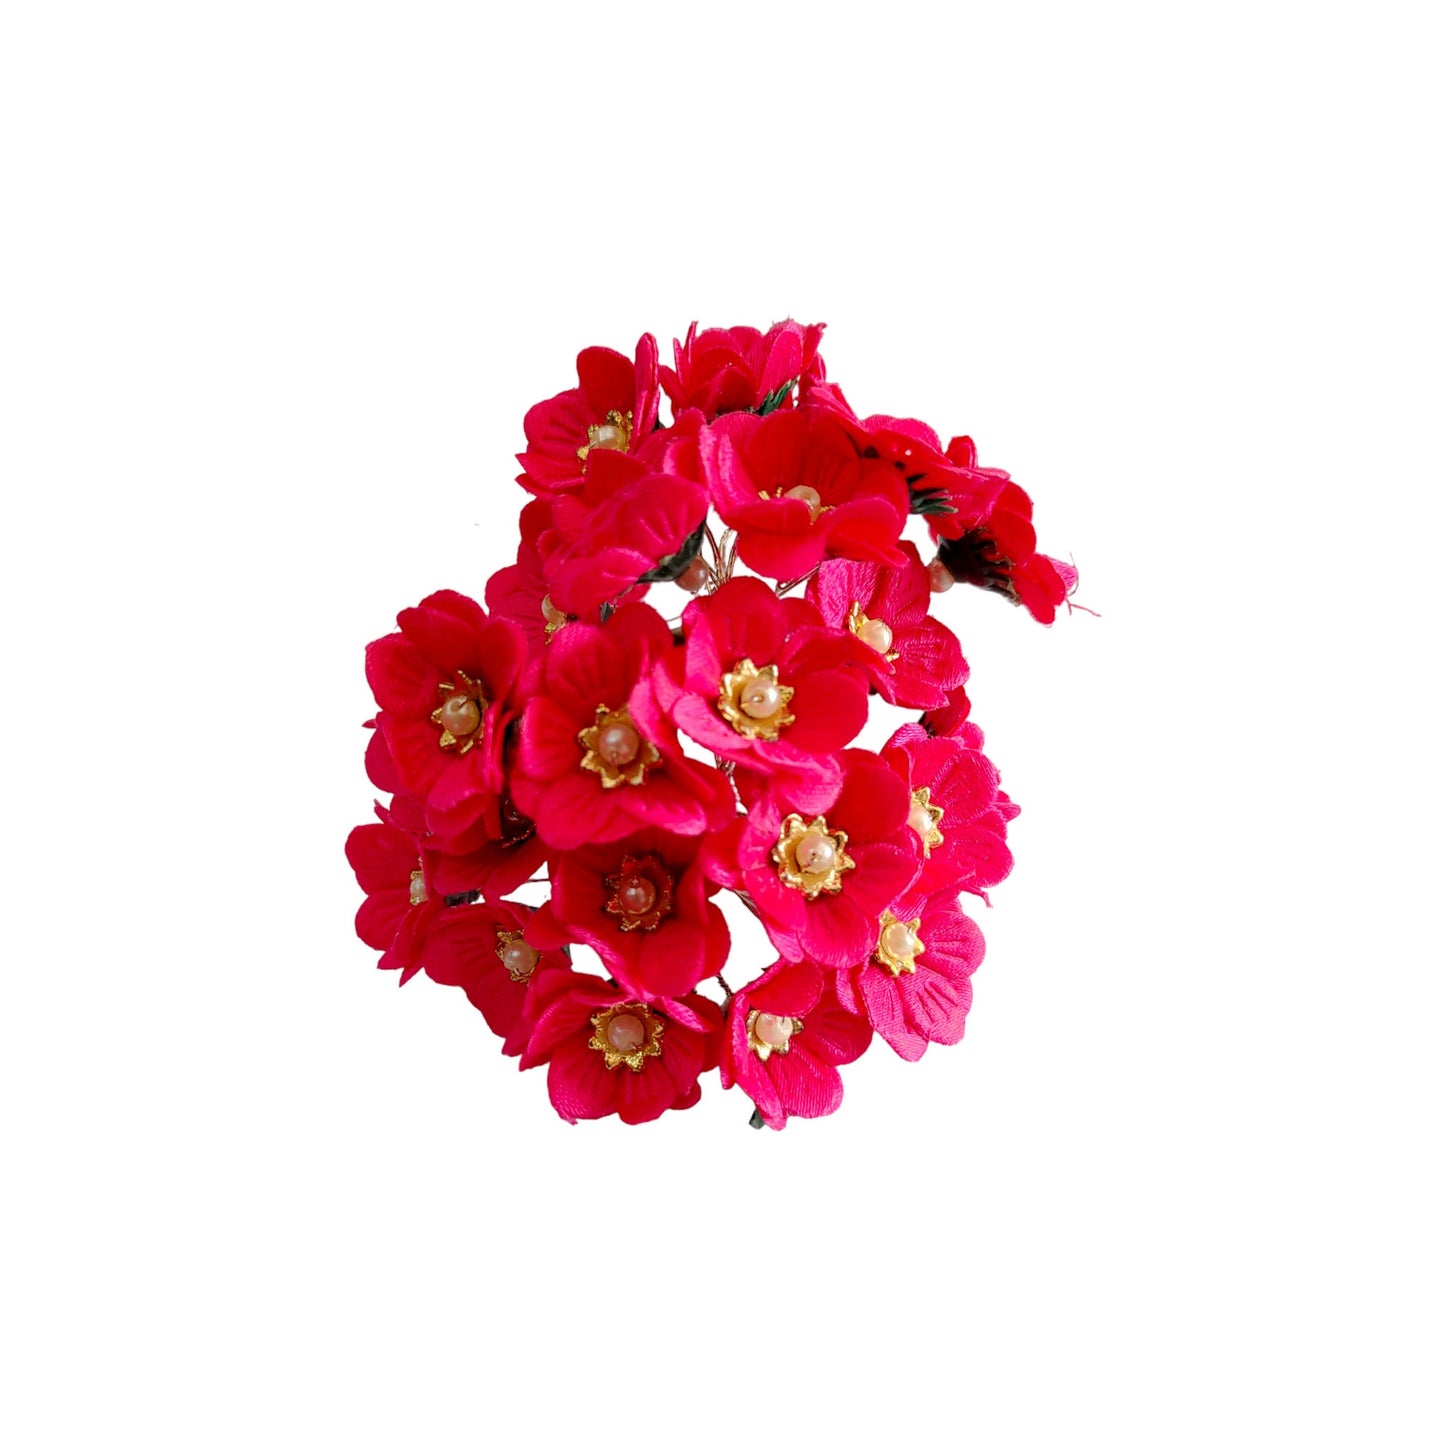 Decorative Artificial Primrose Fabric Flower for Decor, Craft or Textile, 60Pcs -11134, Crimson